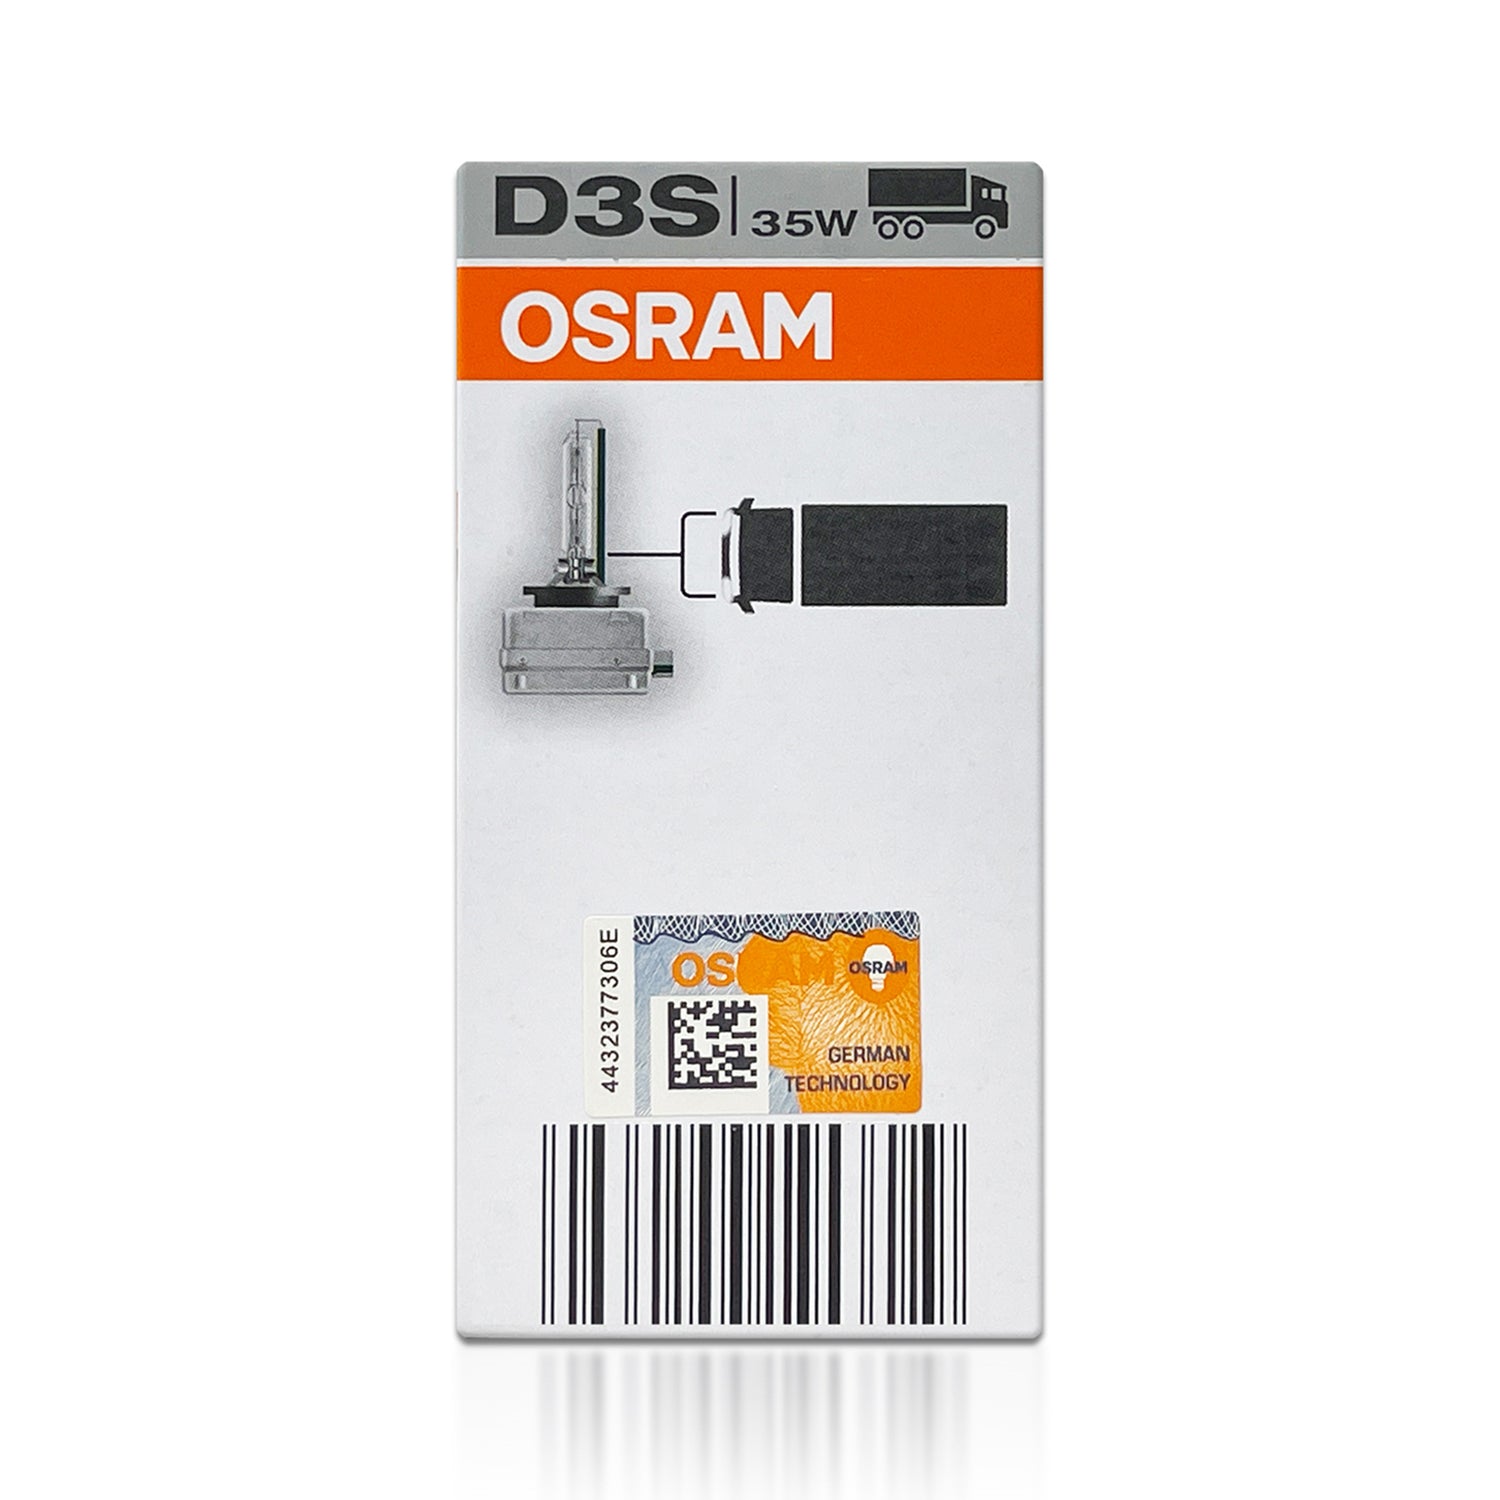 Osram D3S Xenon Bulb, Osram Xenarc 66340